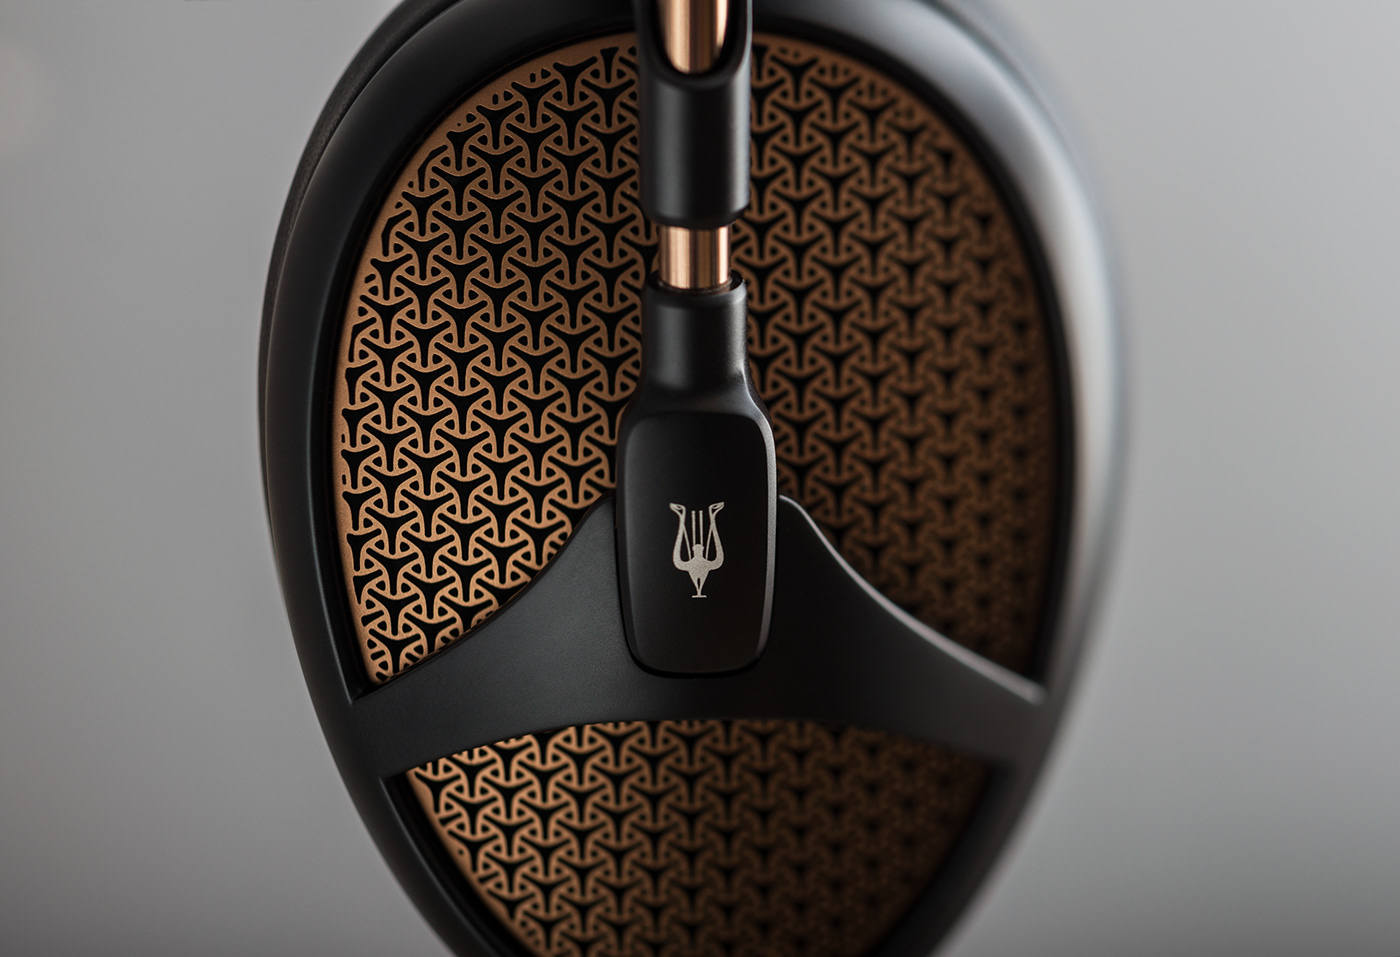 headphones isodynamic HIFI Audio personal audio cnc aluminium Carbon Fiber flagship planar magnetic TOTL